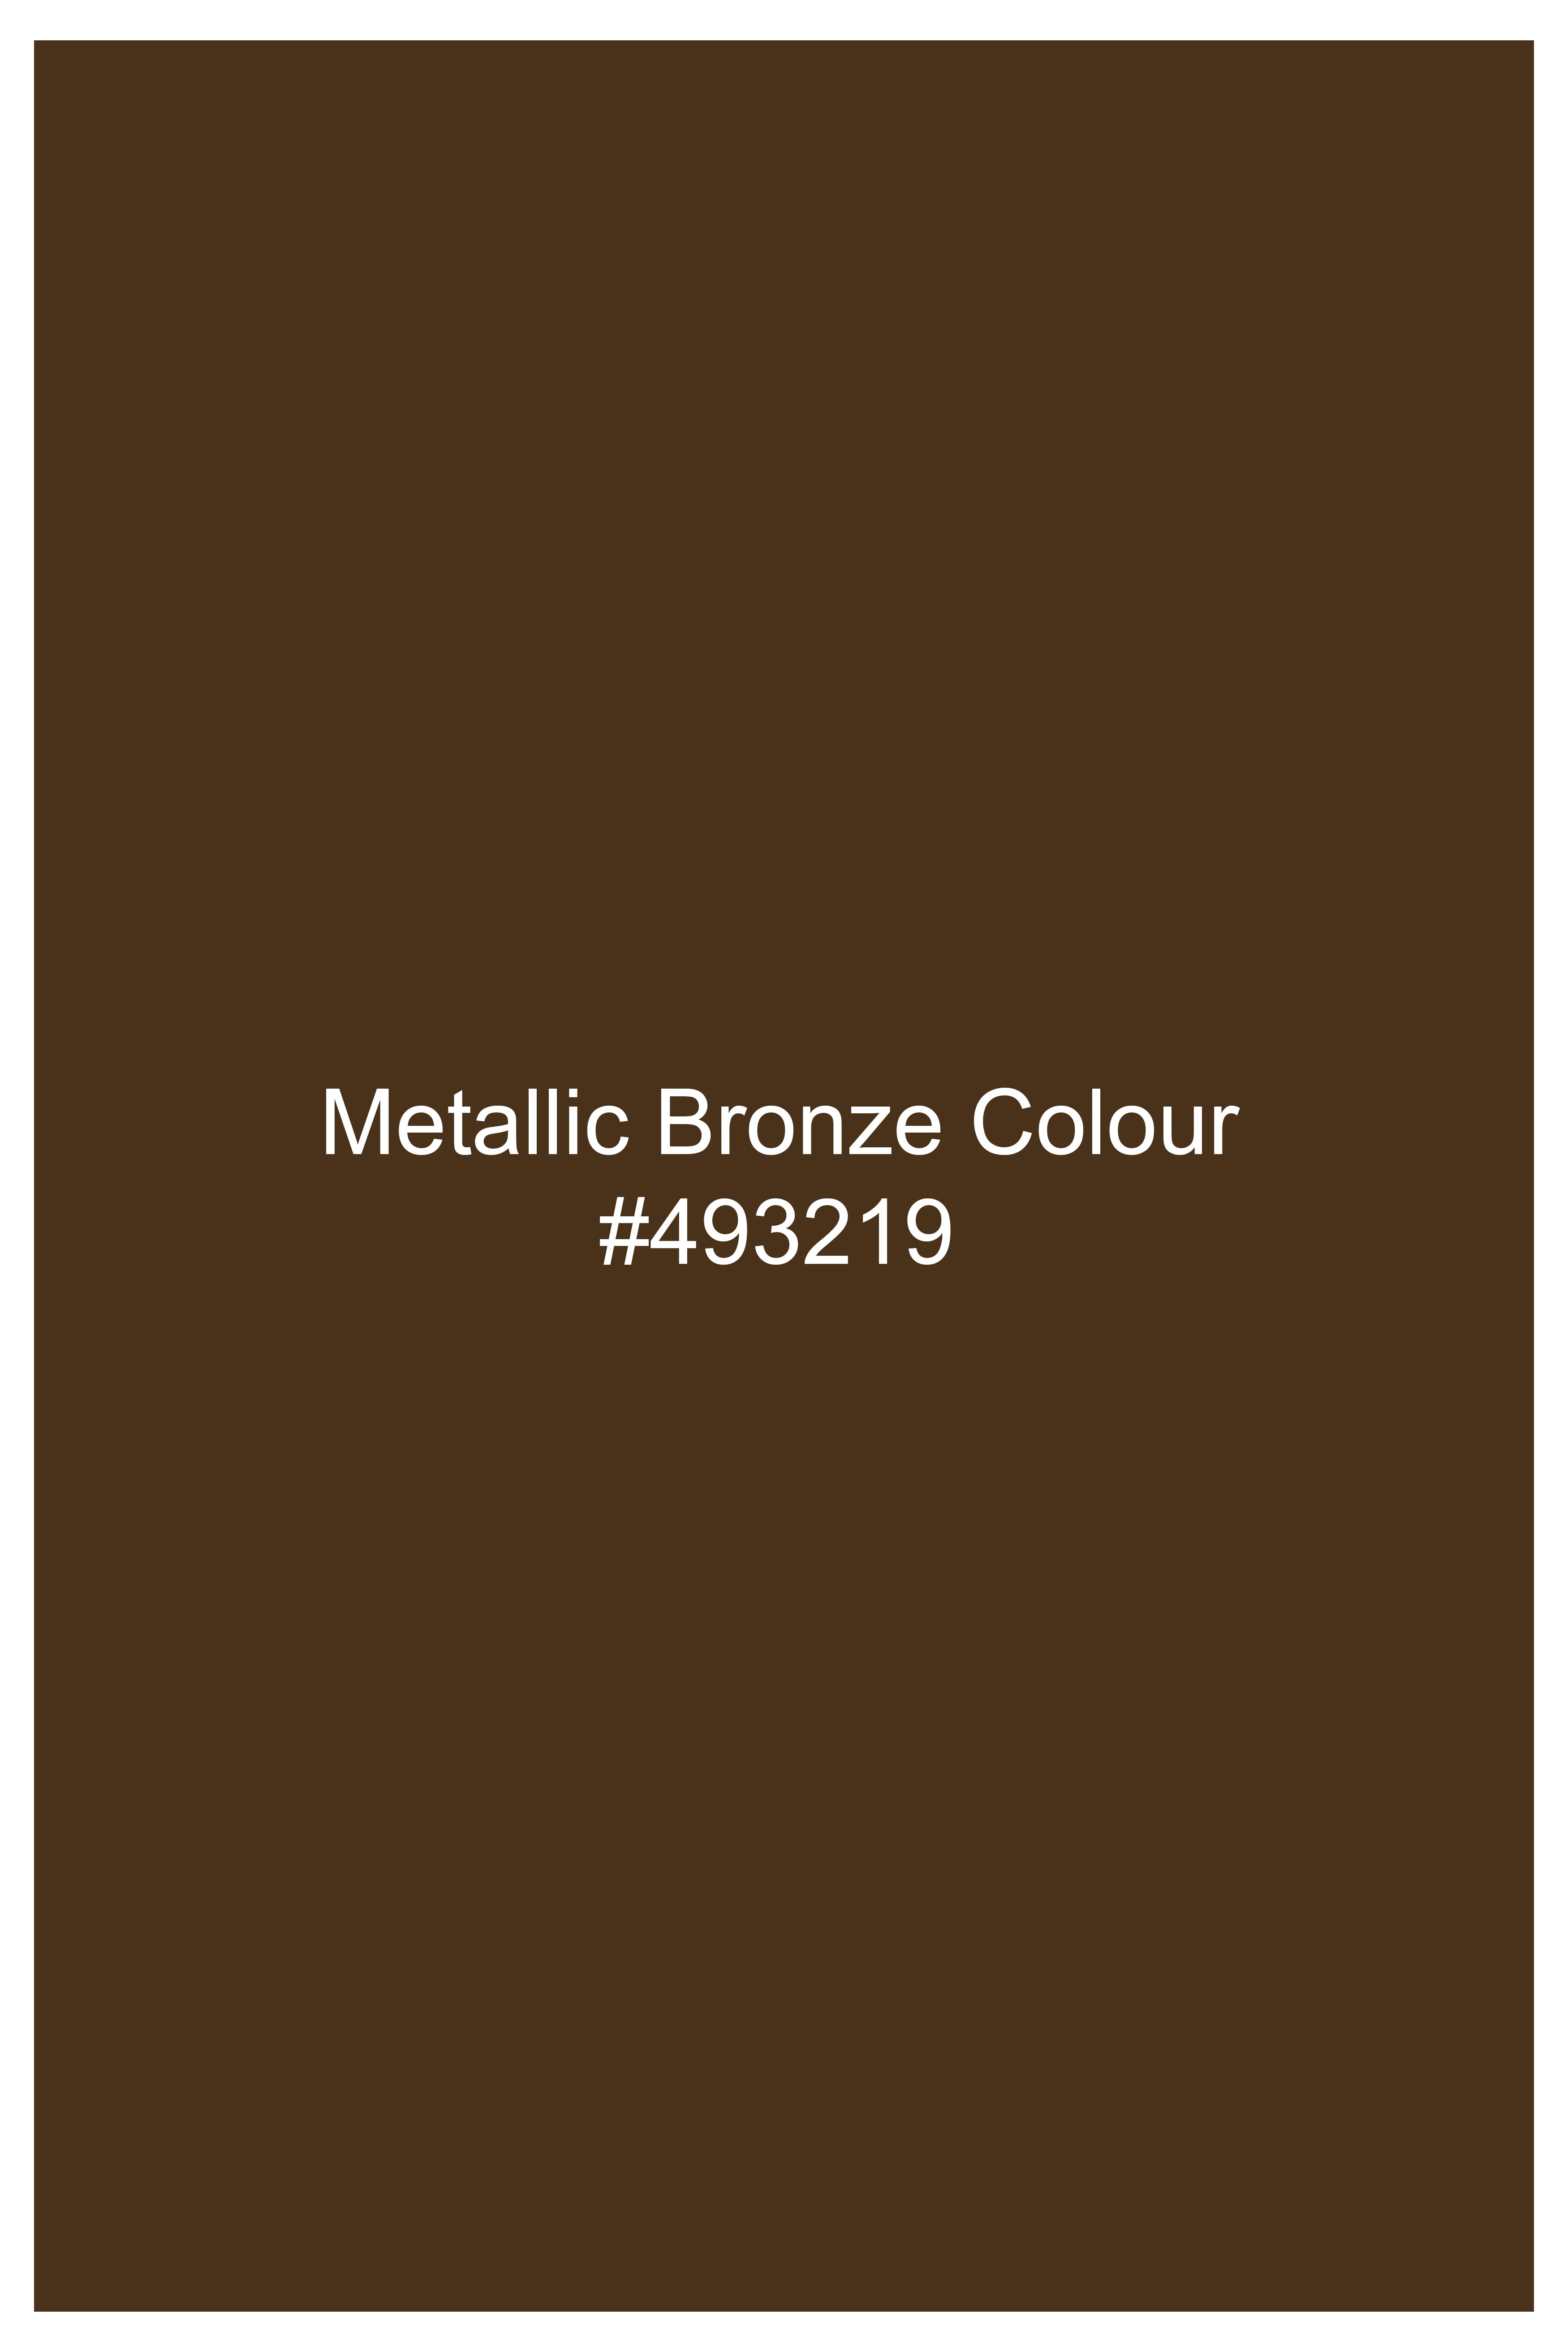 Metallic Bronze Brown Double Breasted Premium Cotton Stretchable Traveler Blazer BL2778-DB-36, BL2778-DB-38, BL2778-DB-40, BL2778-DB-42, BL2778-DB-44, BL2778-DB-46, BL2778-DB-48, BL2778-DB-50, BL2778-DB-52, BL2778-DB-54, BL2778-DB-56, BL2778-DB-58, BL2778-DB-60